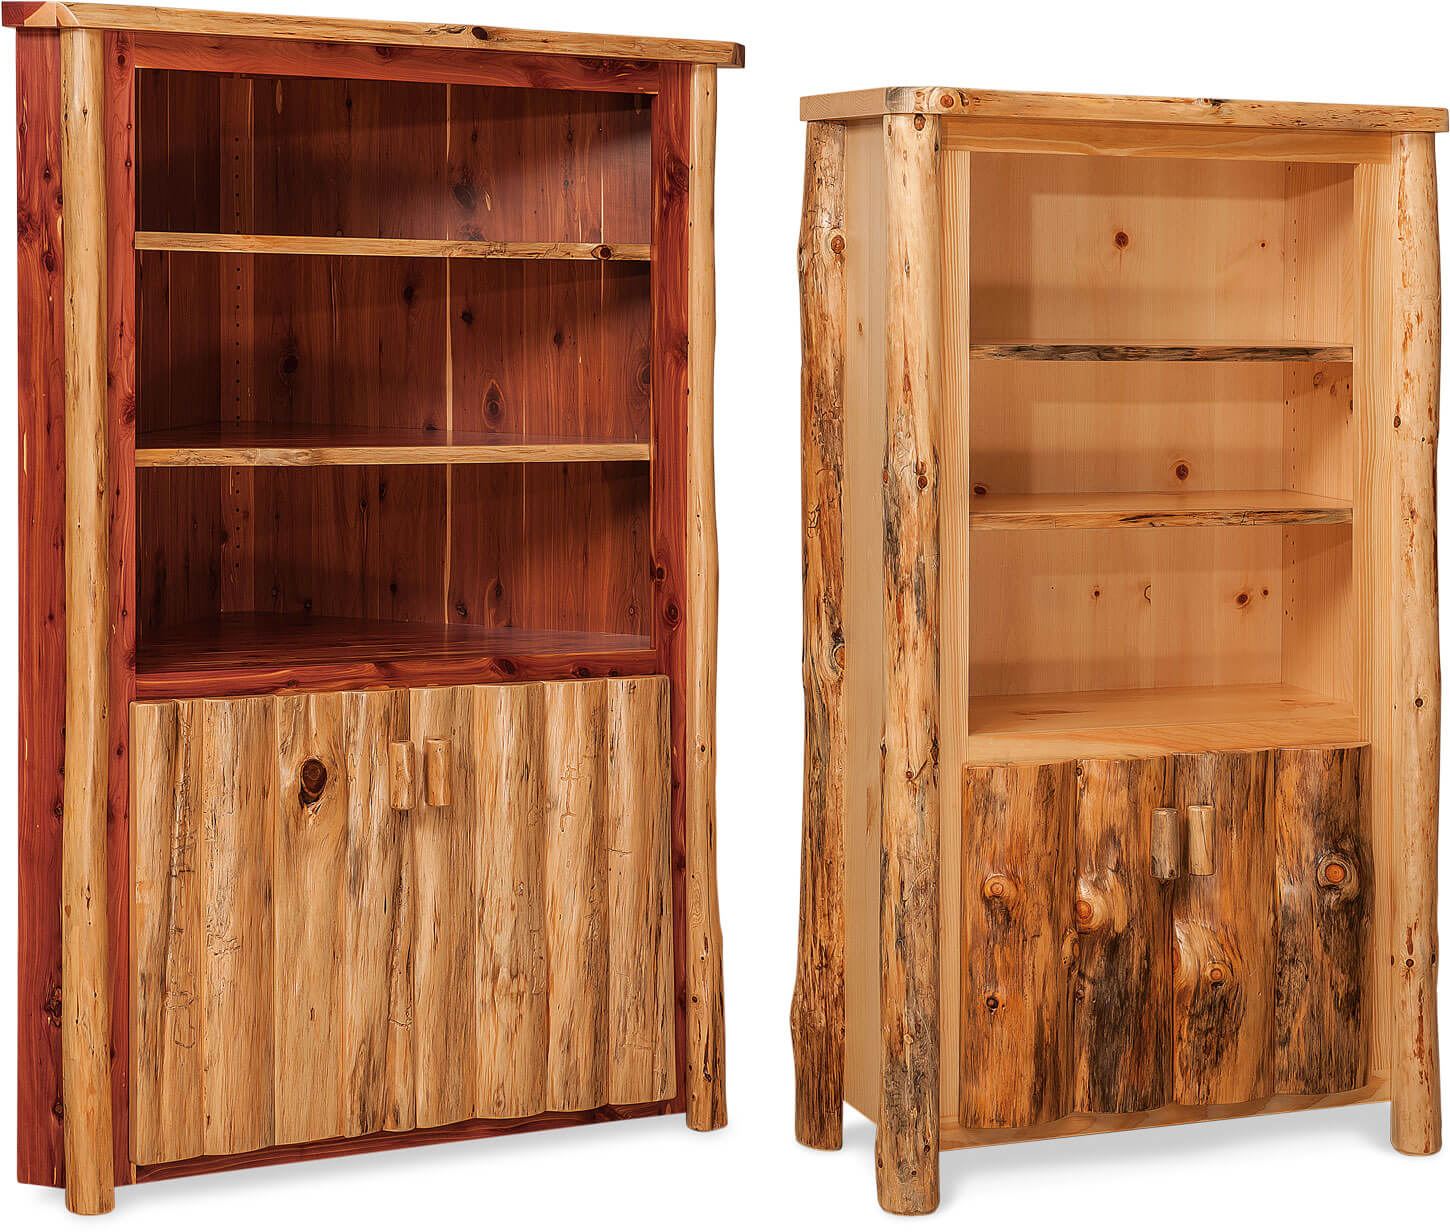 Fireside Log Furniture Bookcase and Corner Cabinet with Shelves